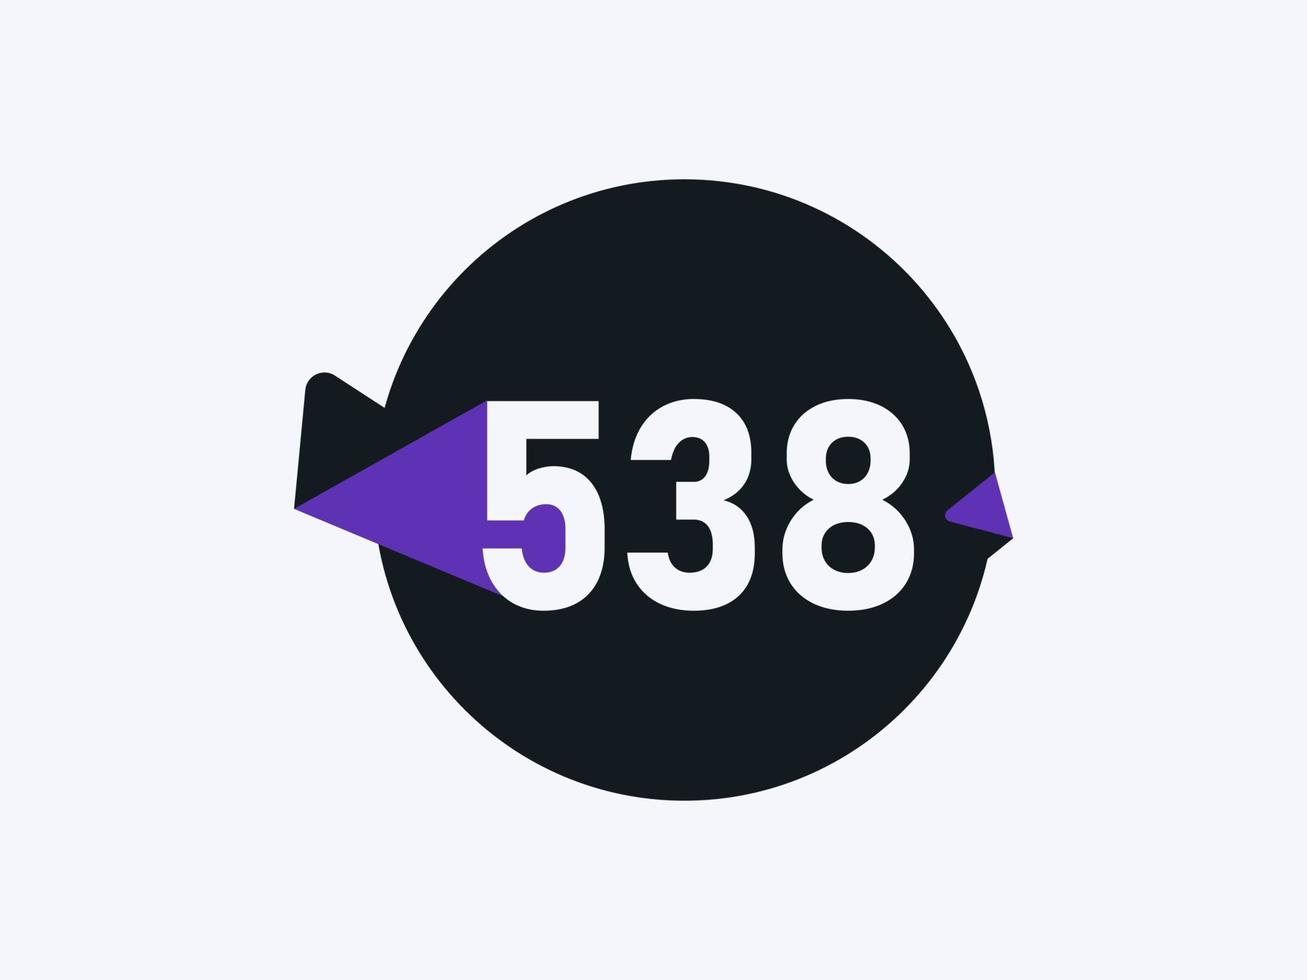 538 Number logo icon design vector image. Number logo icon design vector image